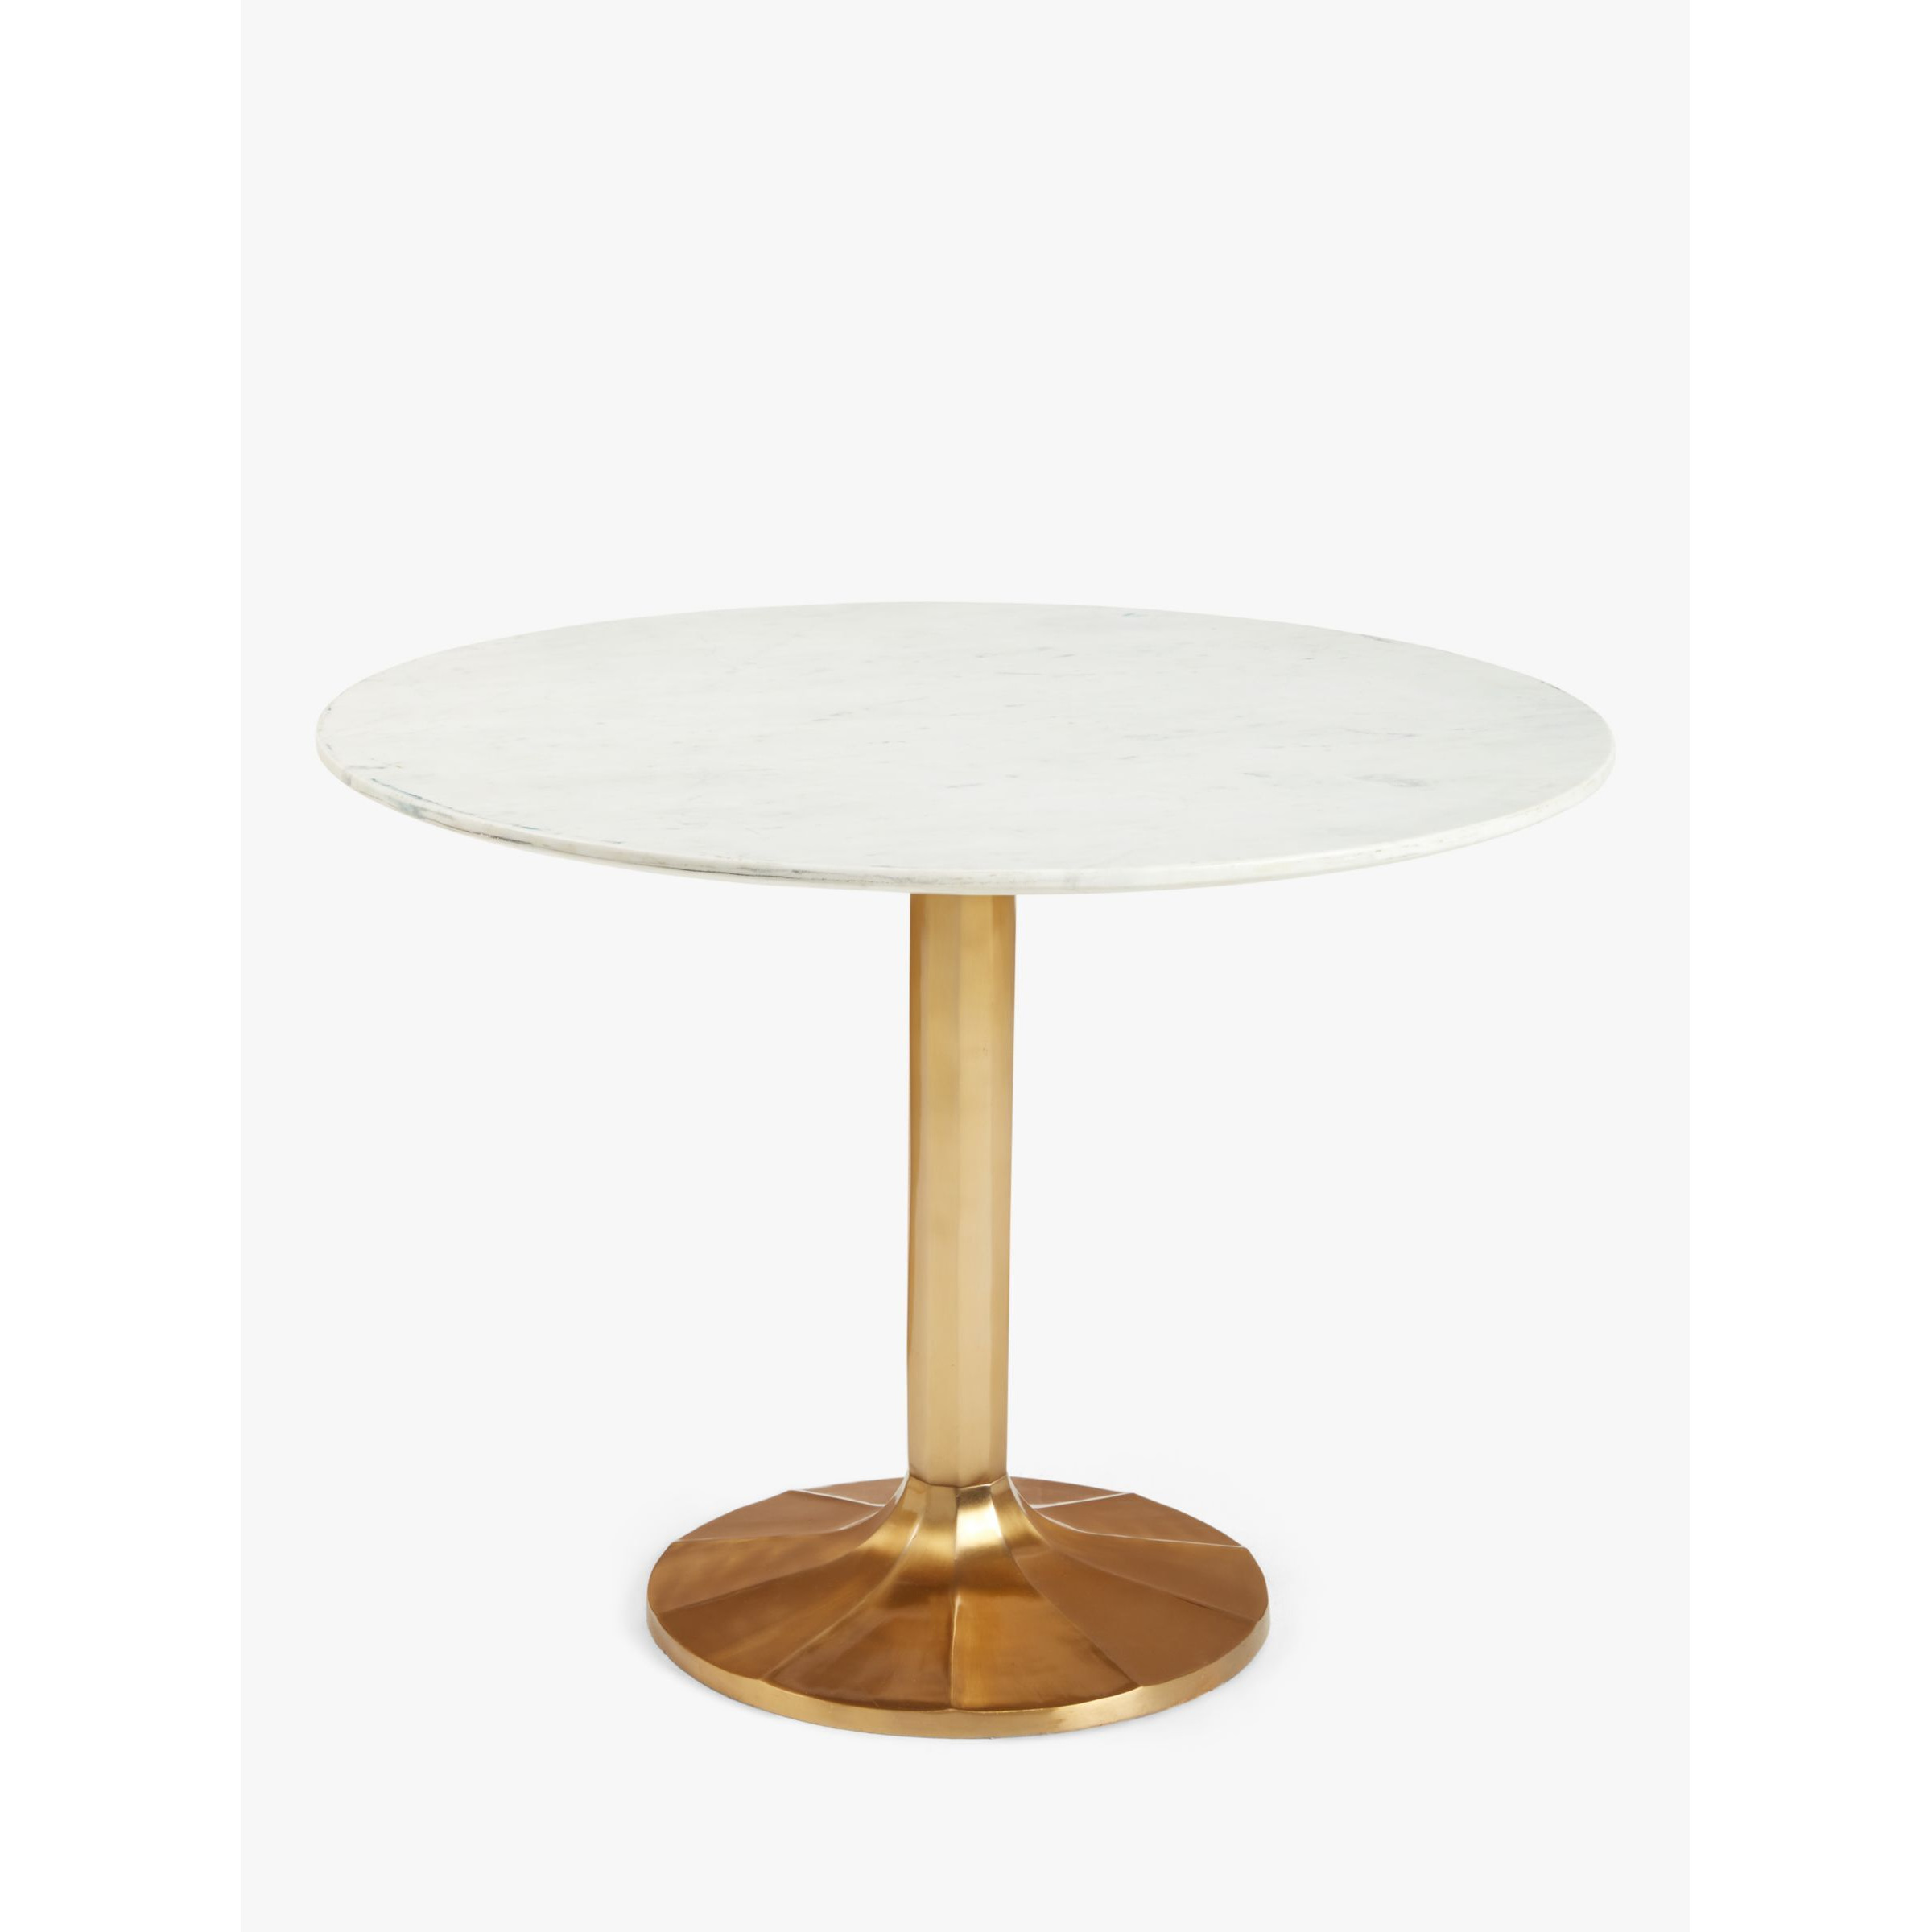 John Lewis Jewel Marble 4 Seater Pedestal Dining Table, White/Gold - image 1